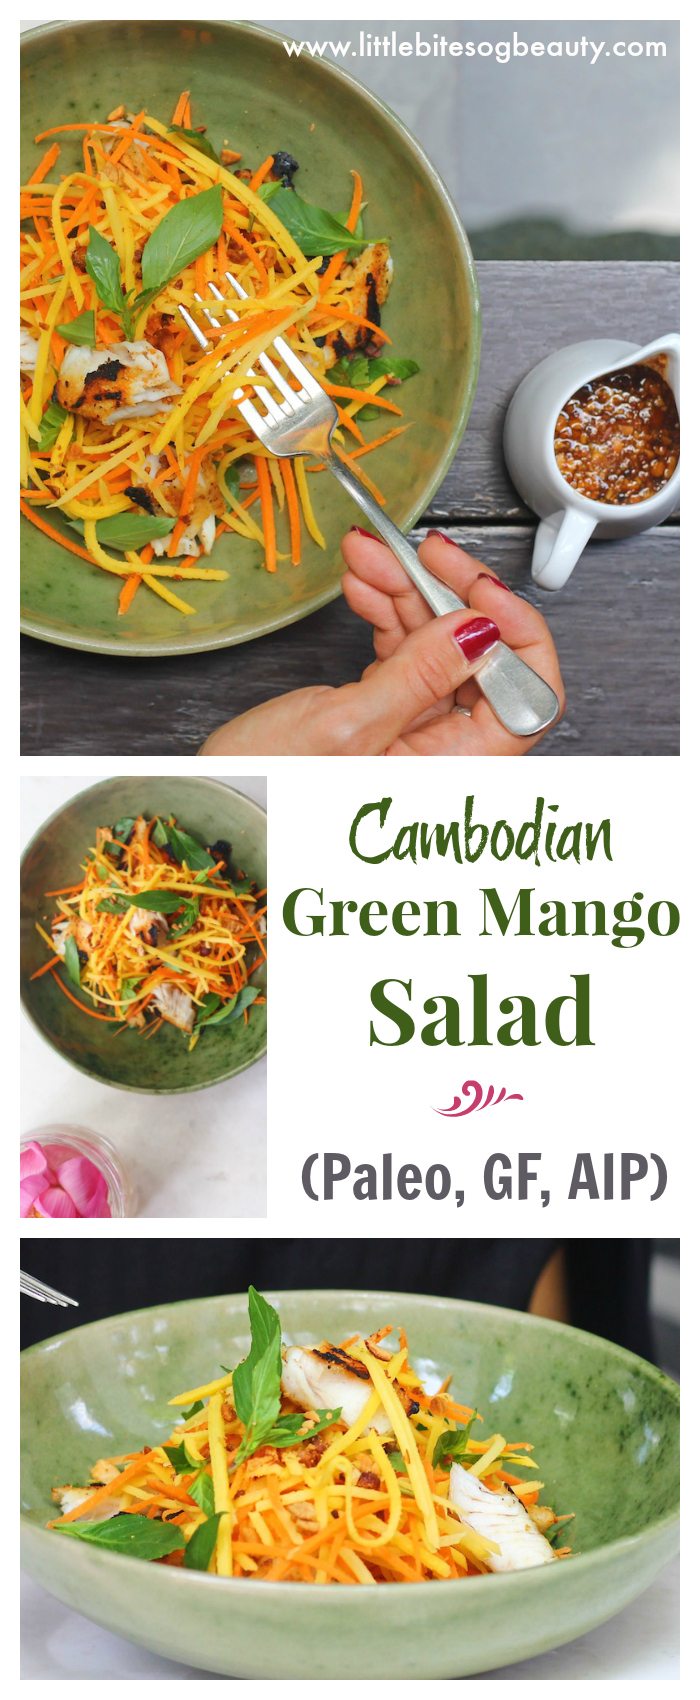 Green Mango Salad (Paleo, GF, AIP)